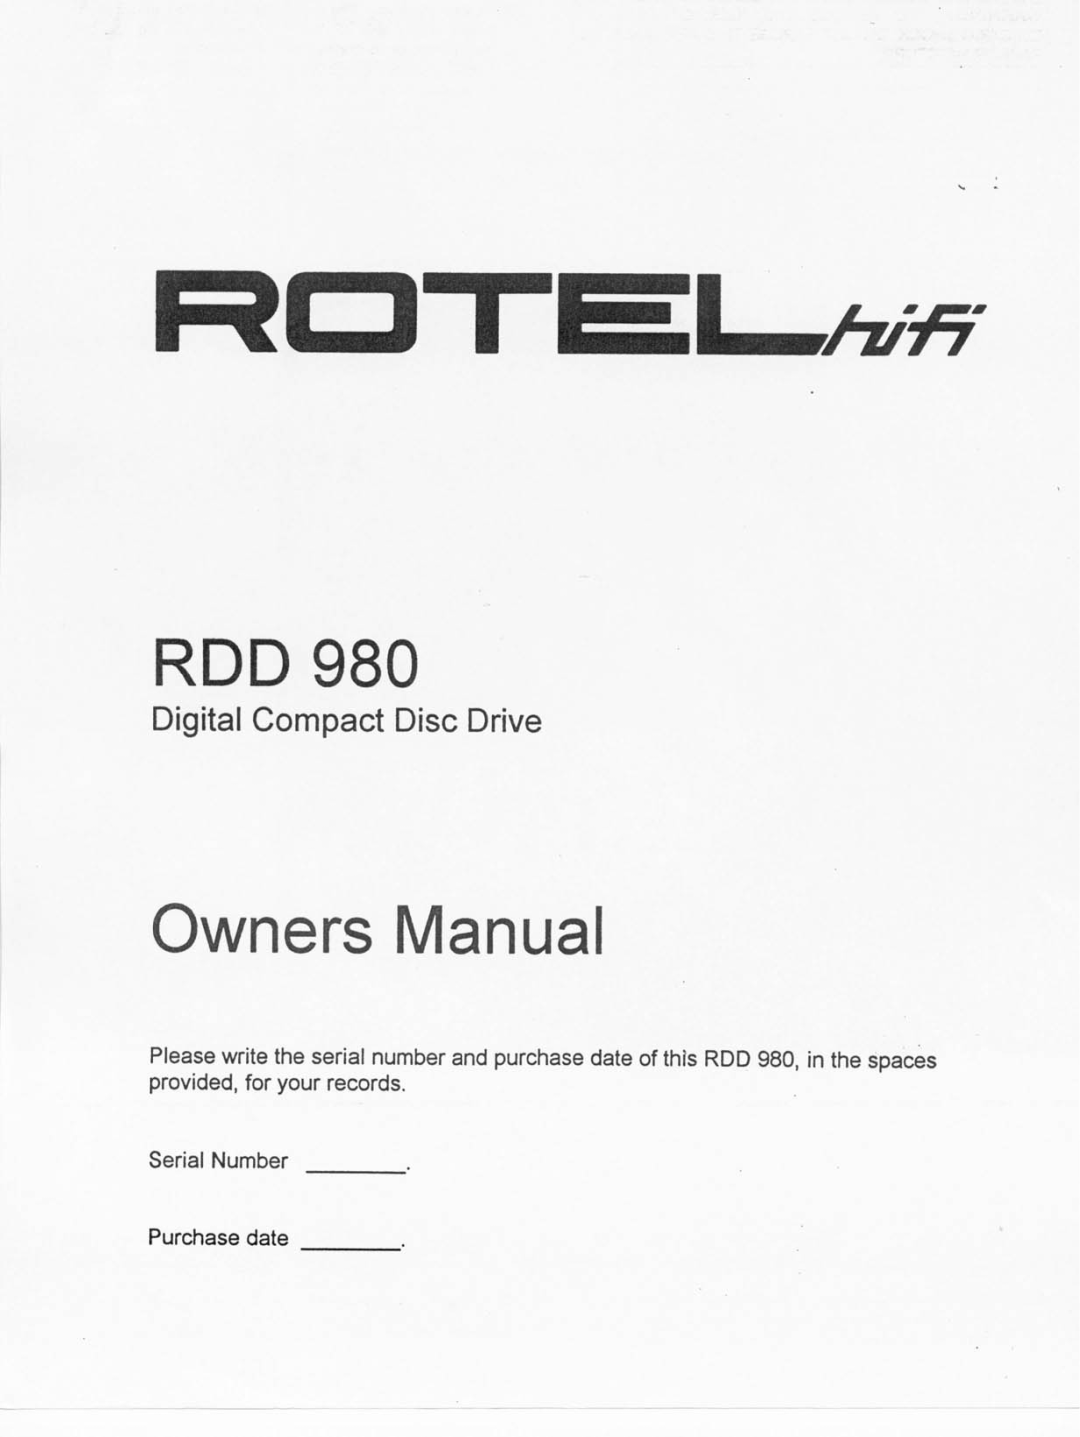 Rotel RDD 980 manual 